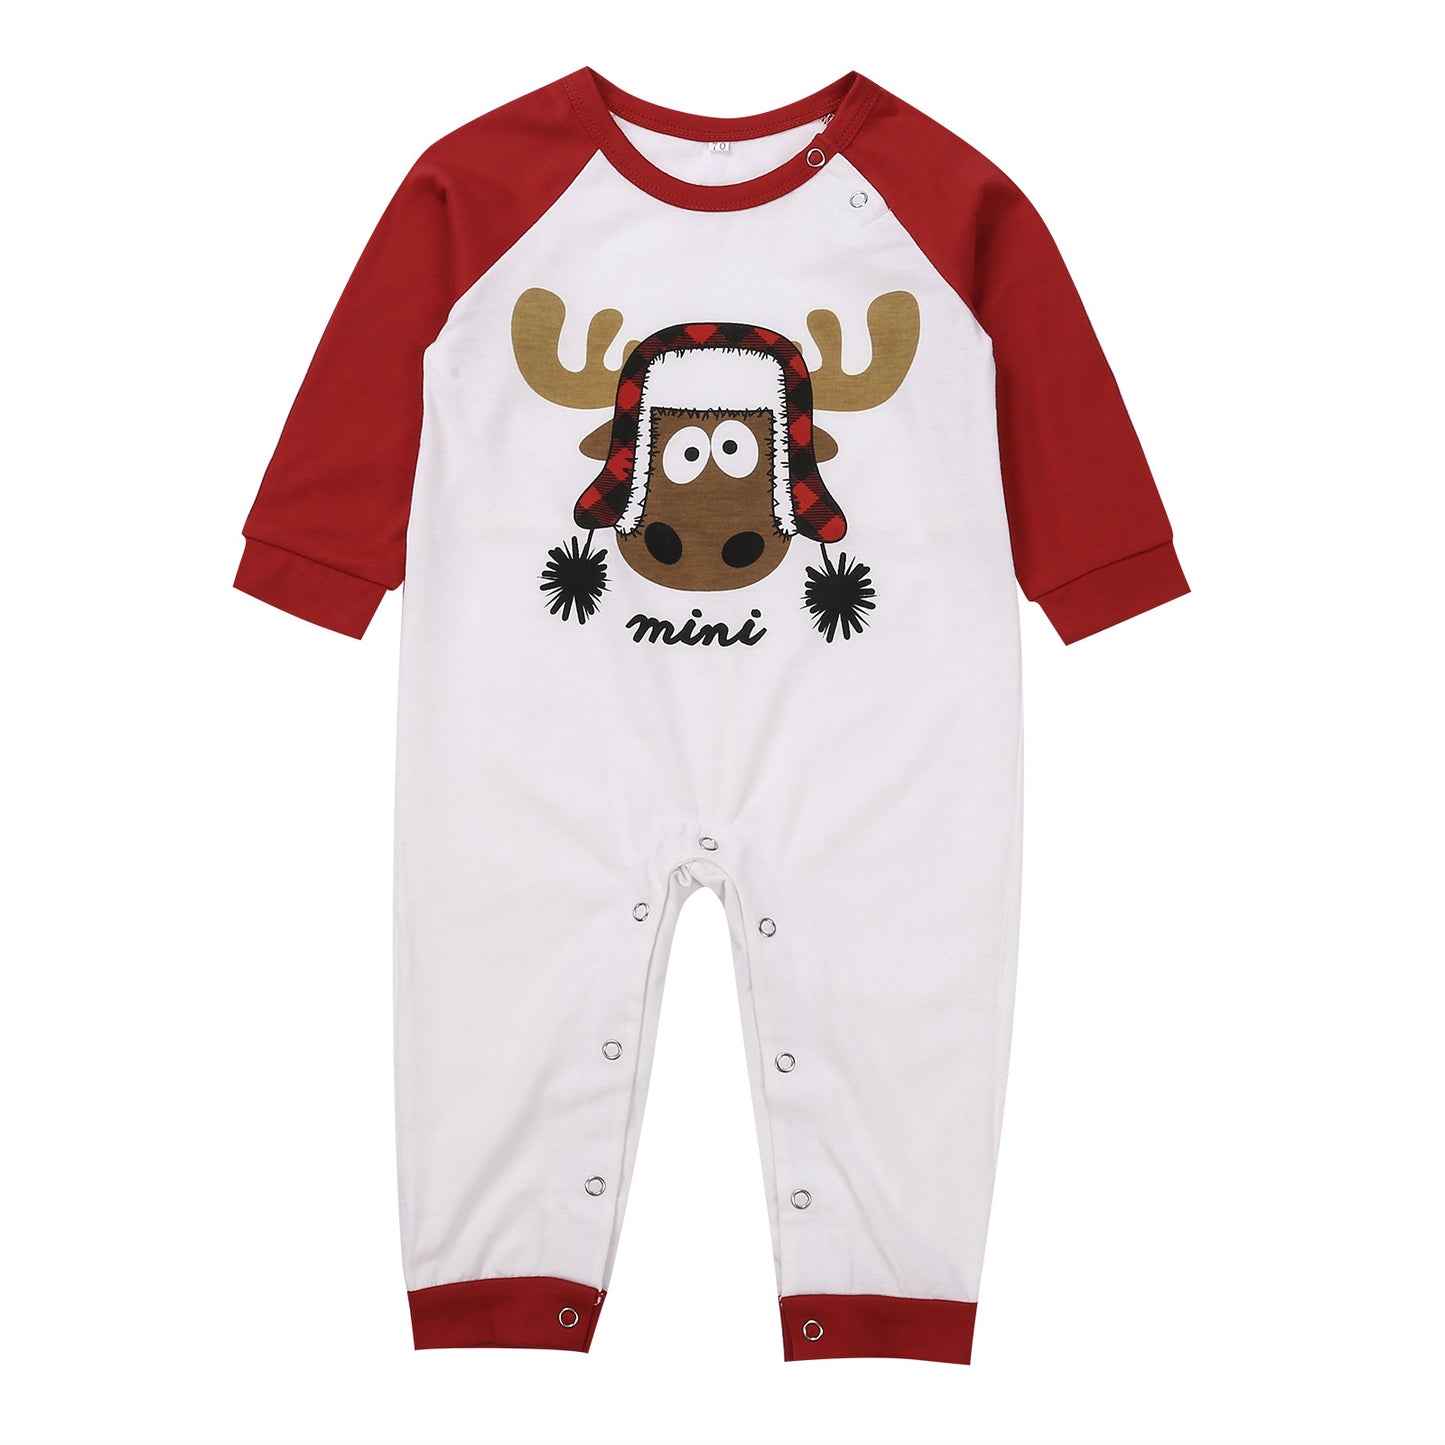 Matching Family Pajamas set with Christmas Elk Print